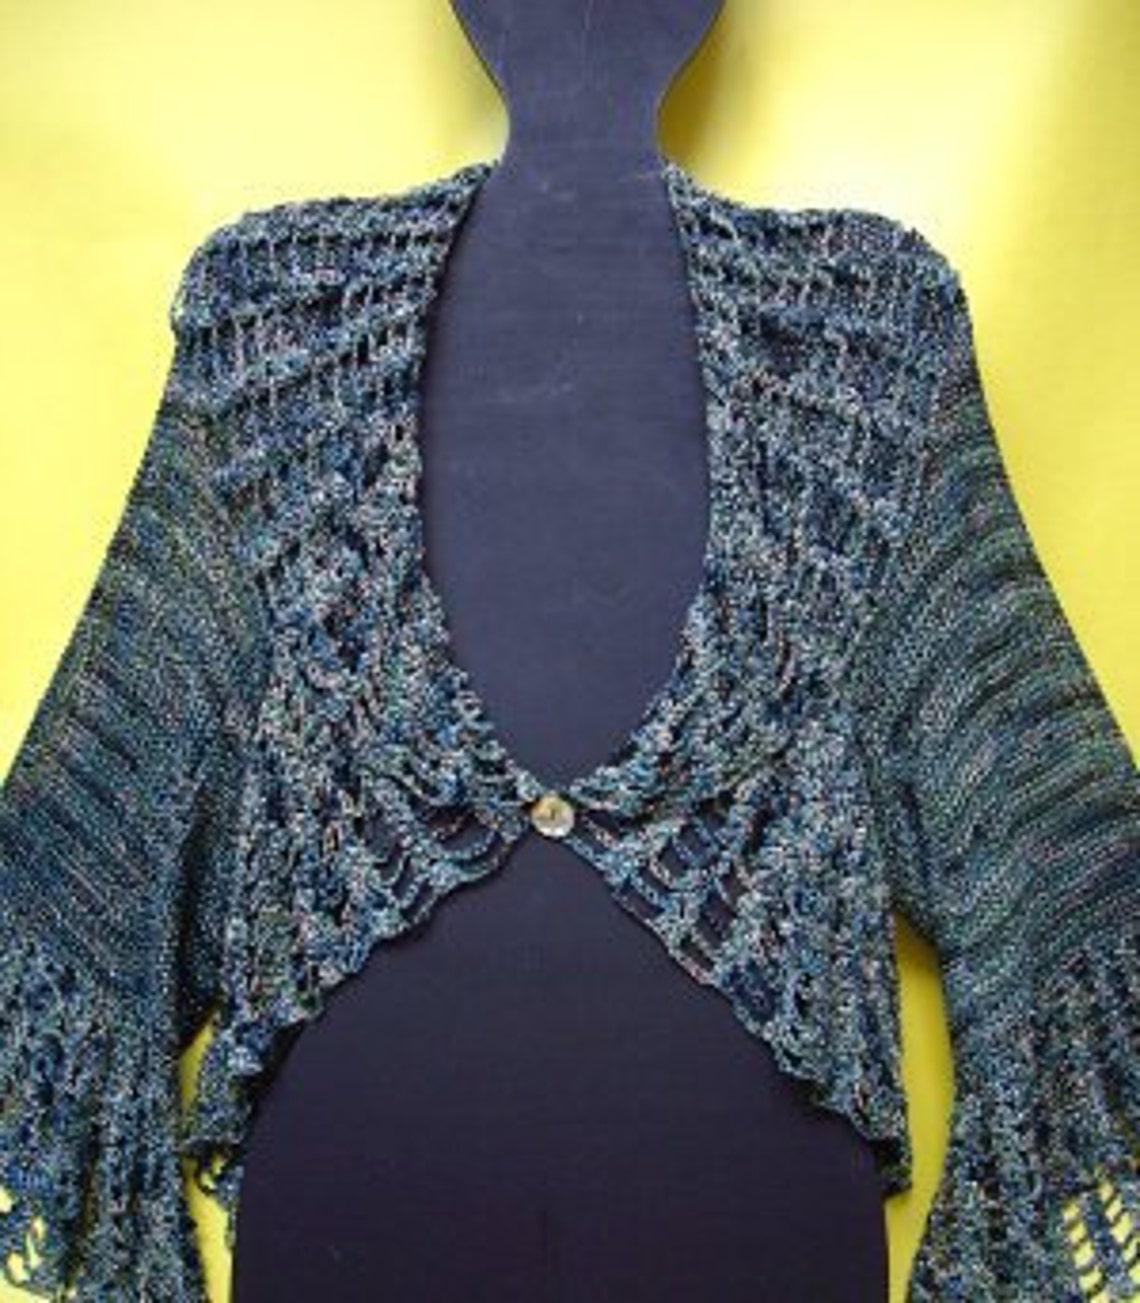 Shruggity Shrug Pattern for Knitting and Crochet via Download - Etsy